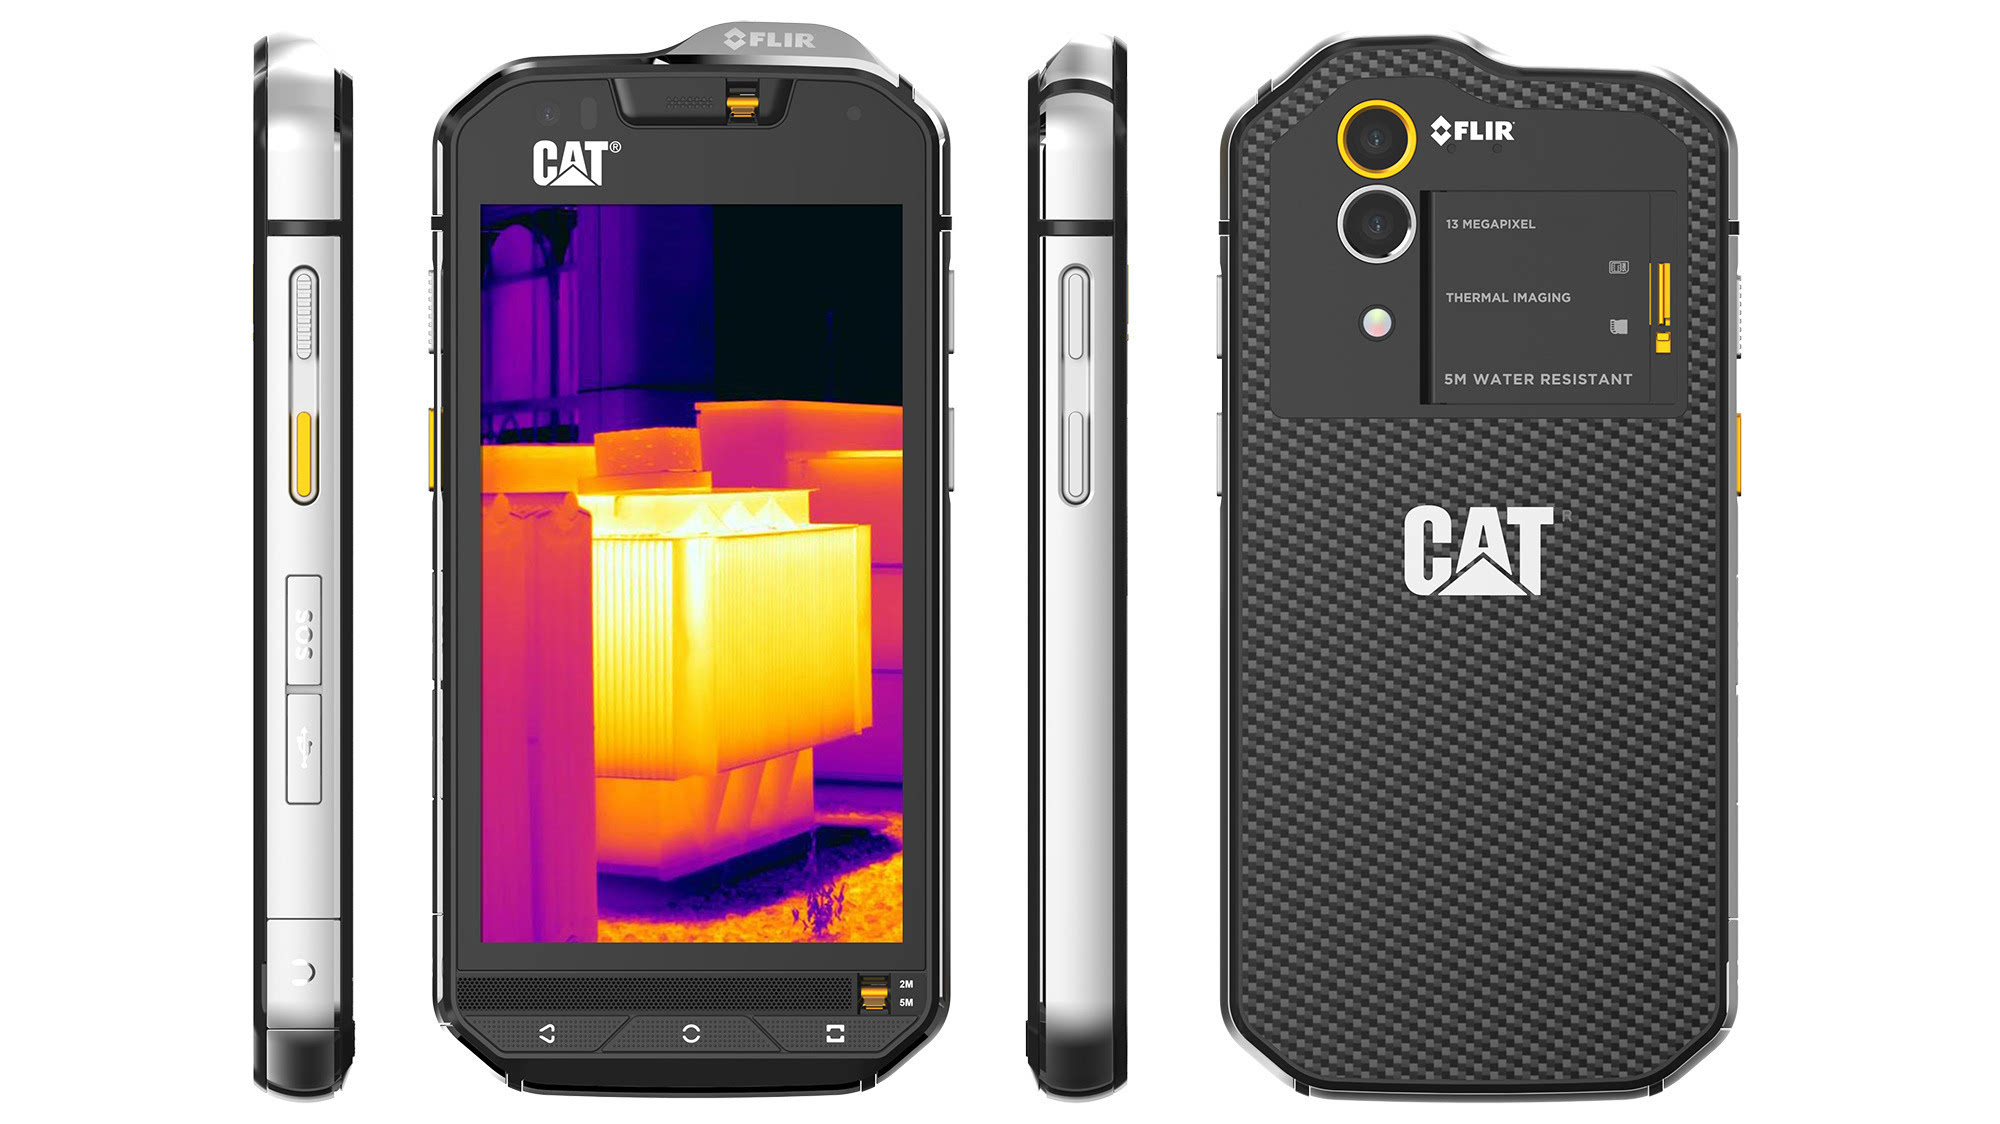 cat要推出一款特殊手机:超级三防 热成像